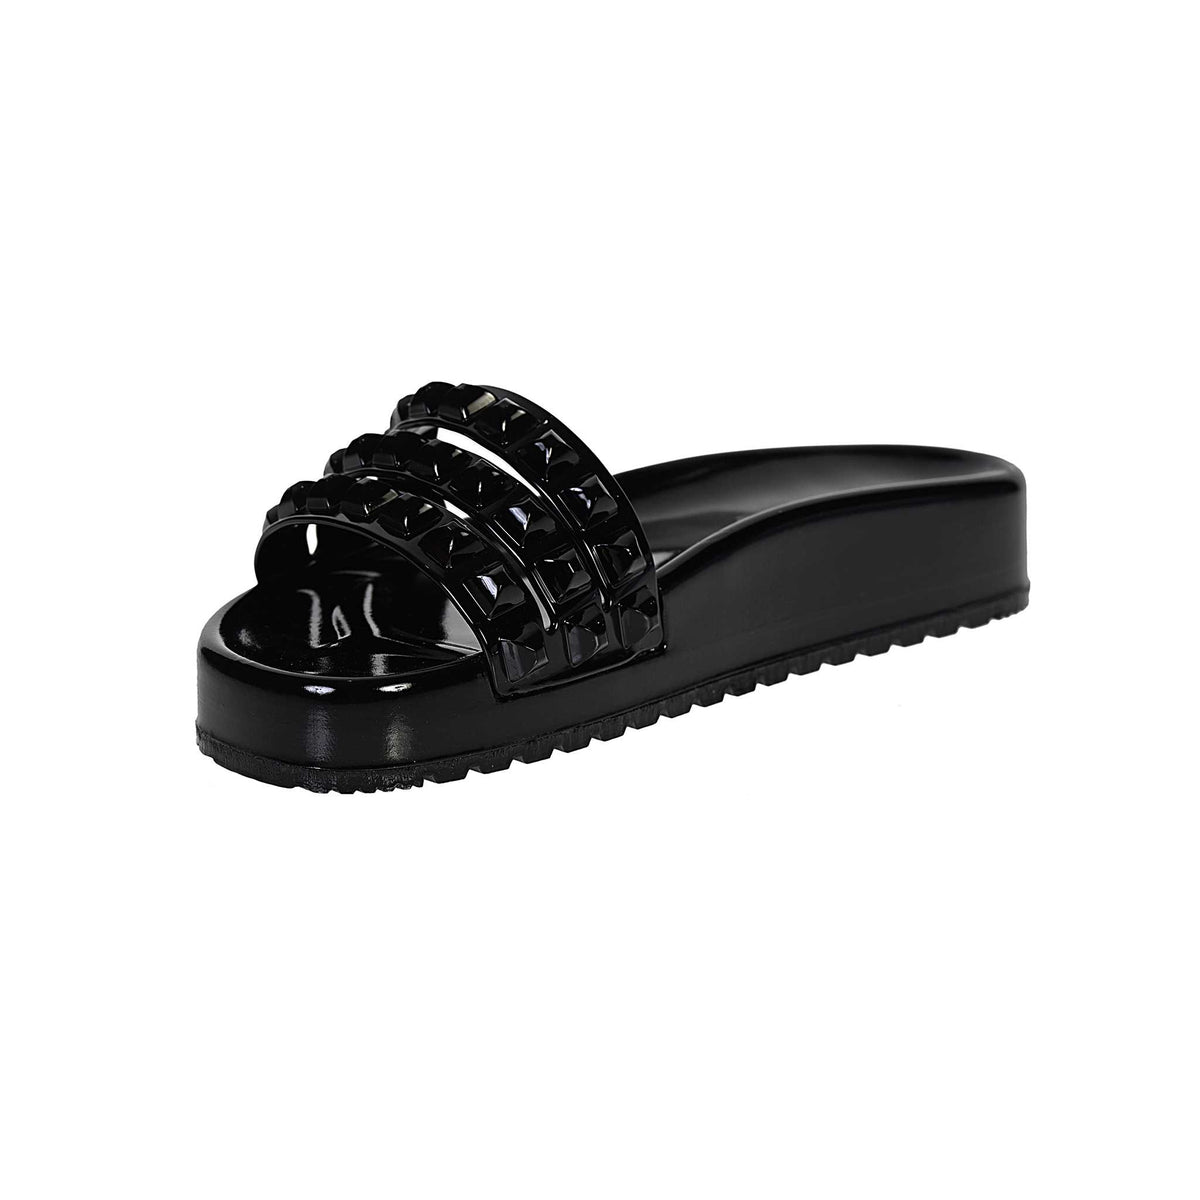 Black platform slide sandals for women, stylish beach look ultra shiny 3 strap shinny look from carmen sol